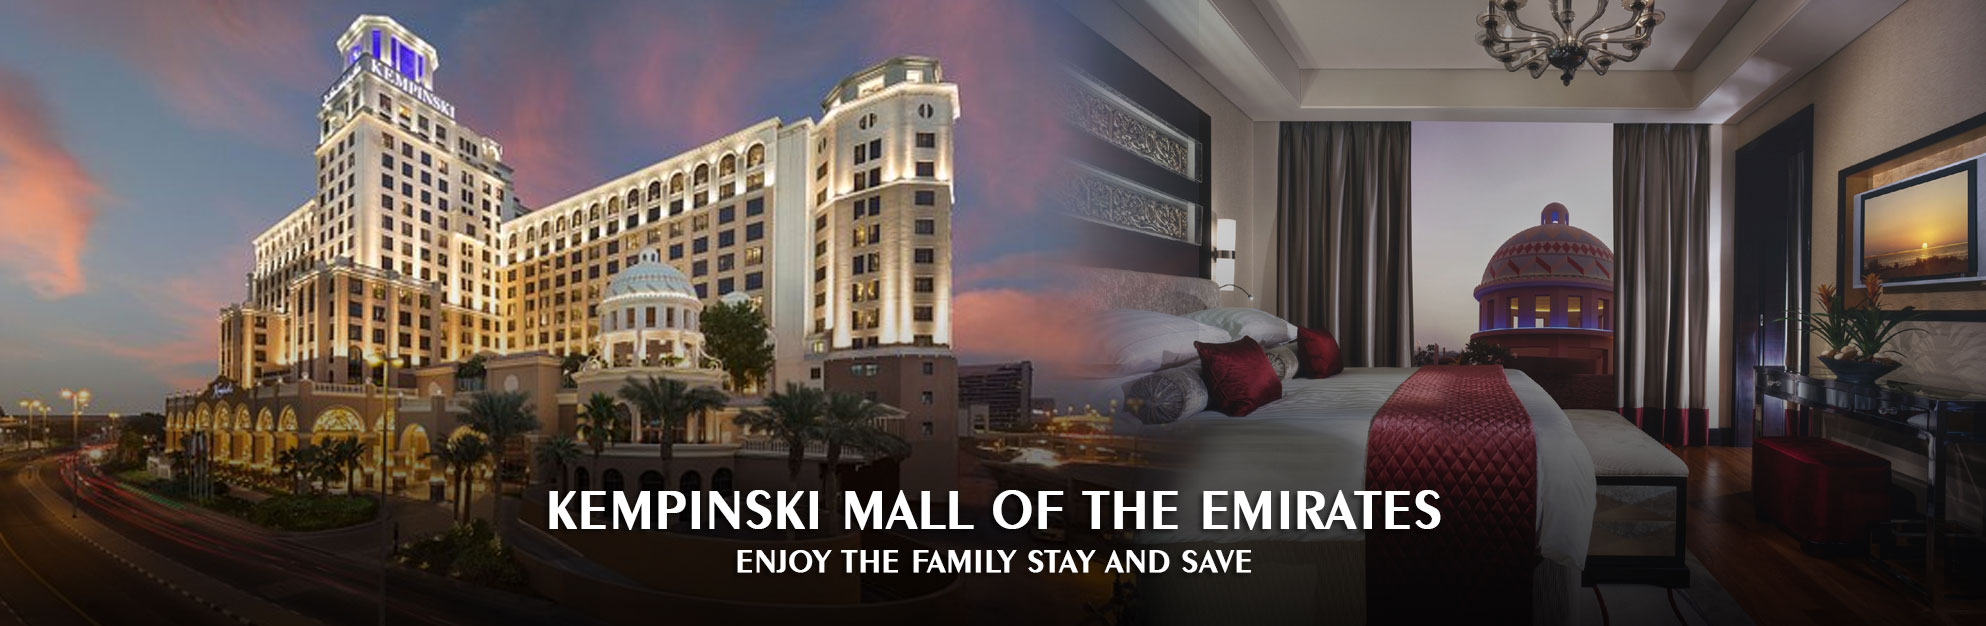 Kempinski Mall of The Emirates